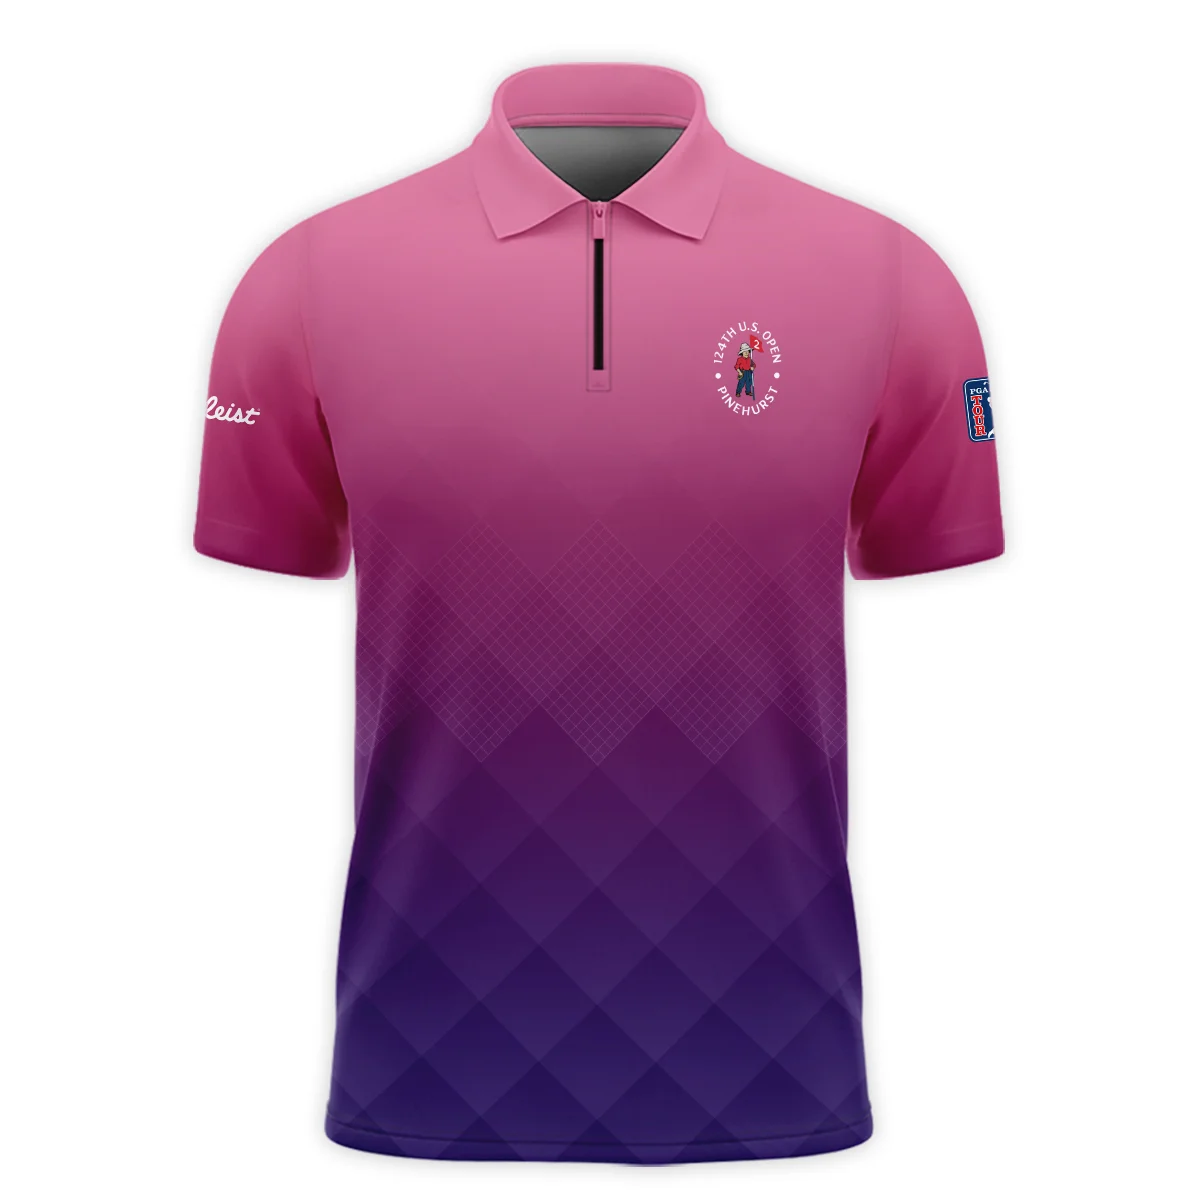 Titleist 124th U.S. Open Pinehurst Purple Pink Gradient Abstract Zipper Polo Shirt Style Classic